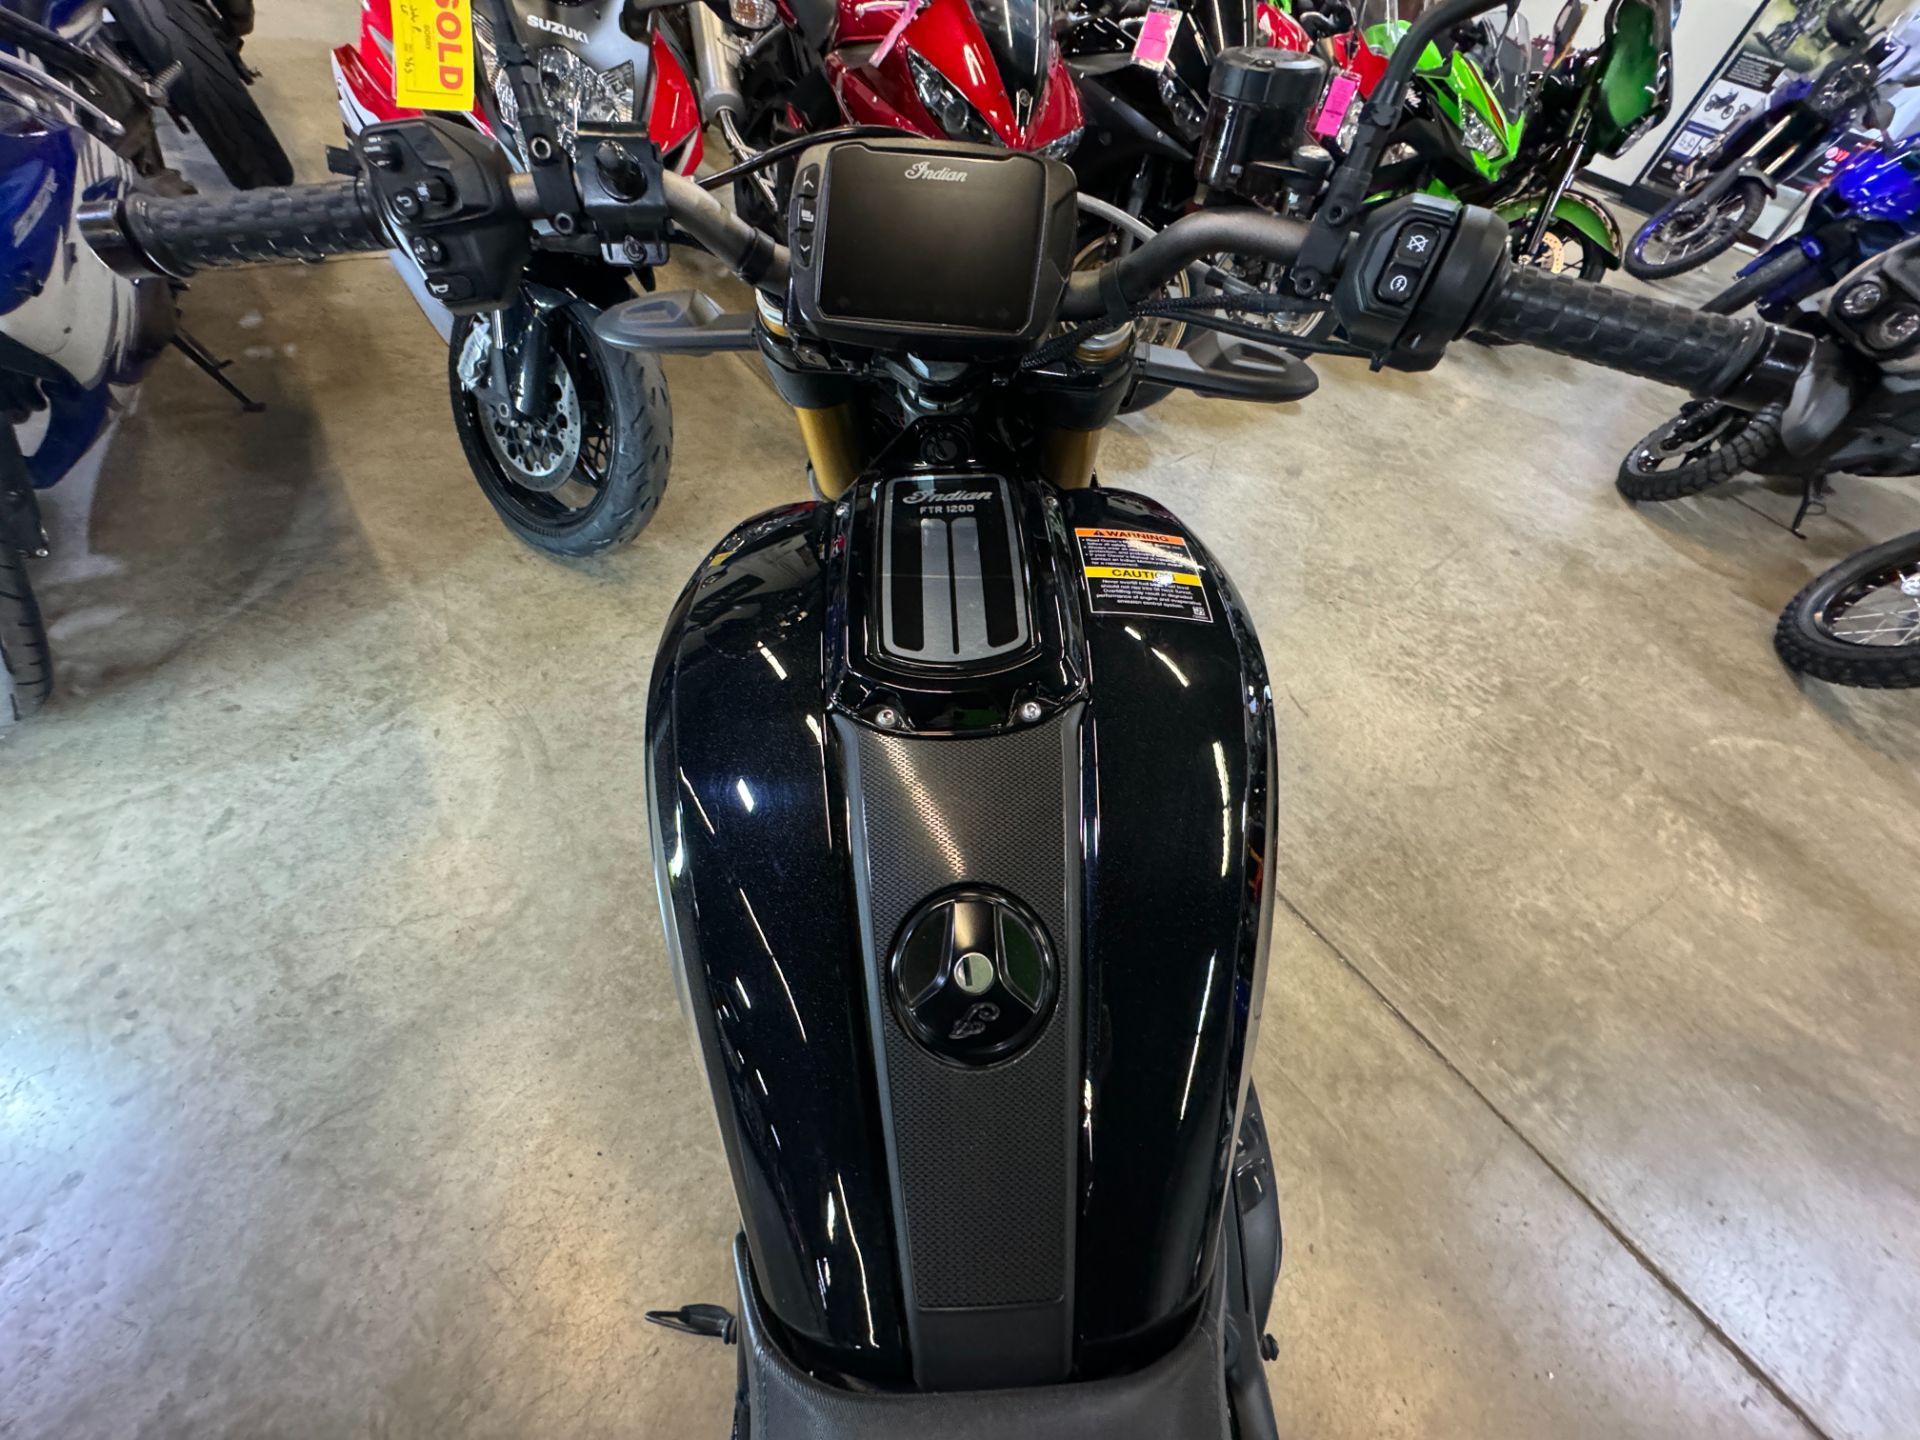 2019 Indian Motorcycle FTR™ 1200 S in Eden Prairie, Minnesota - Photo 10